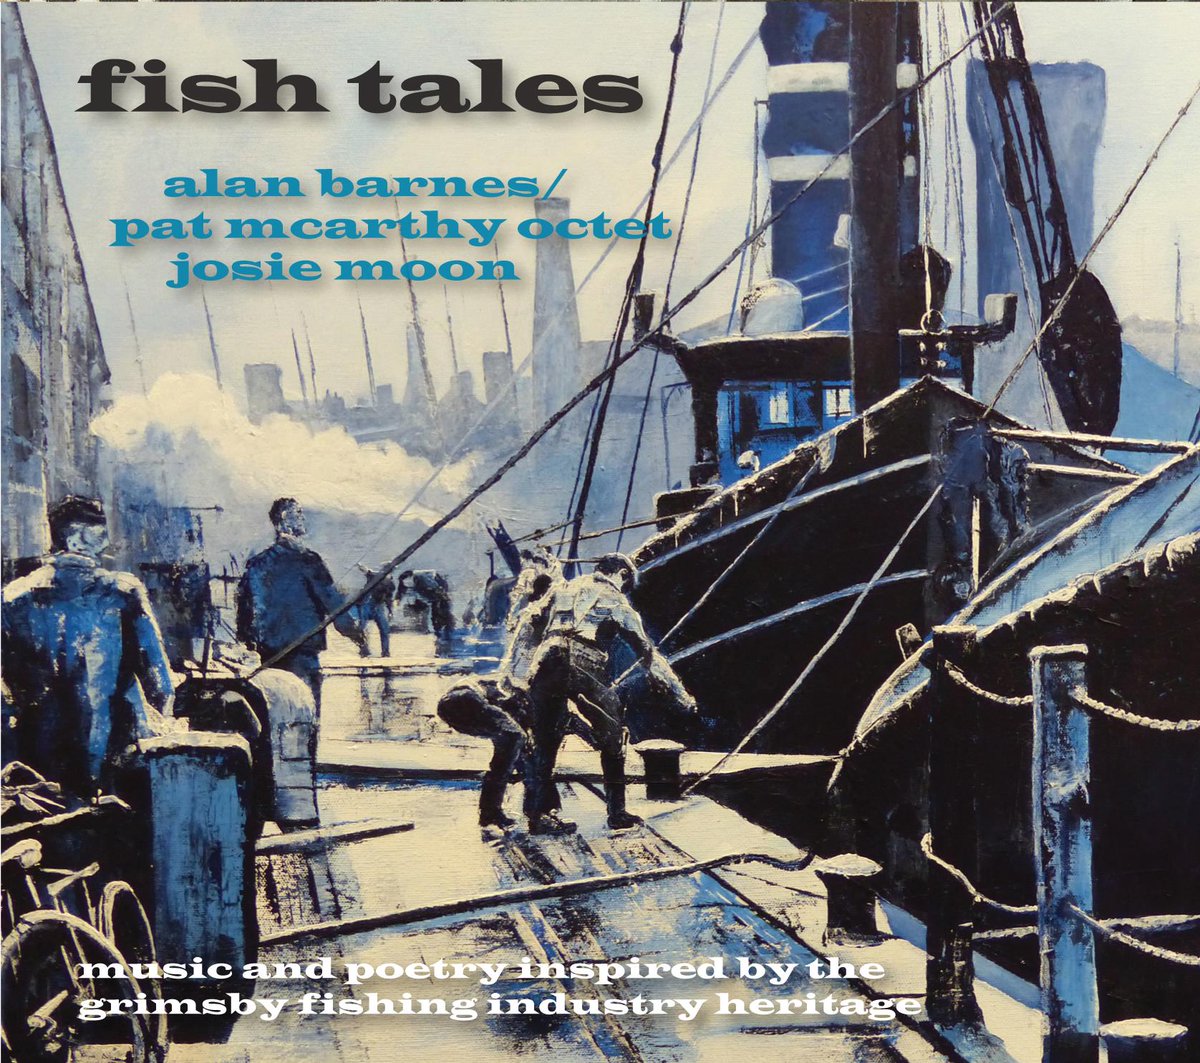 Amazoncom: A Fish Tale: Alan Rickman, Terry Jones, Aaron